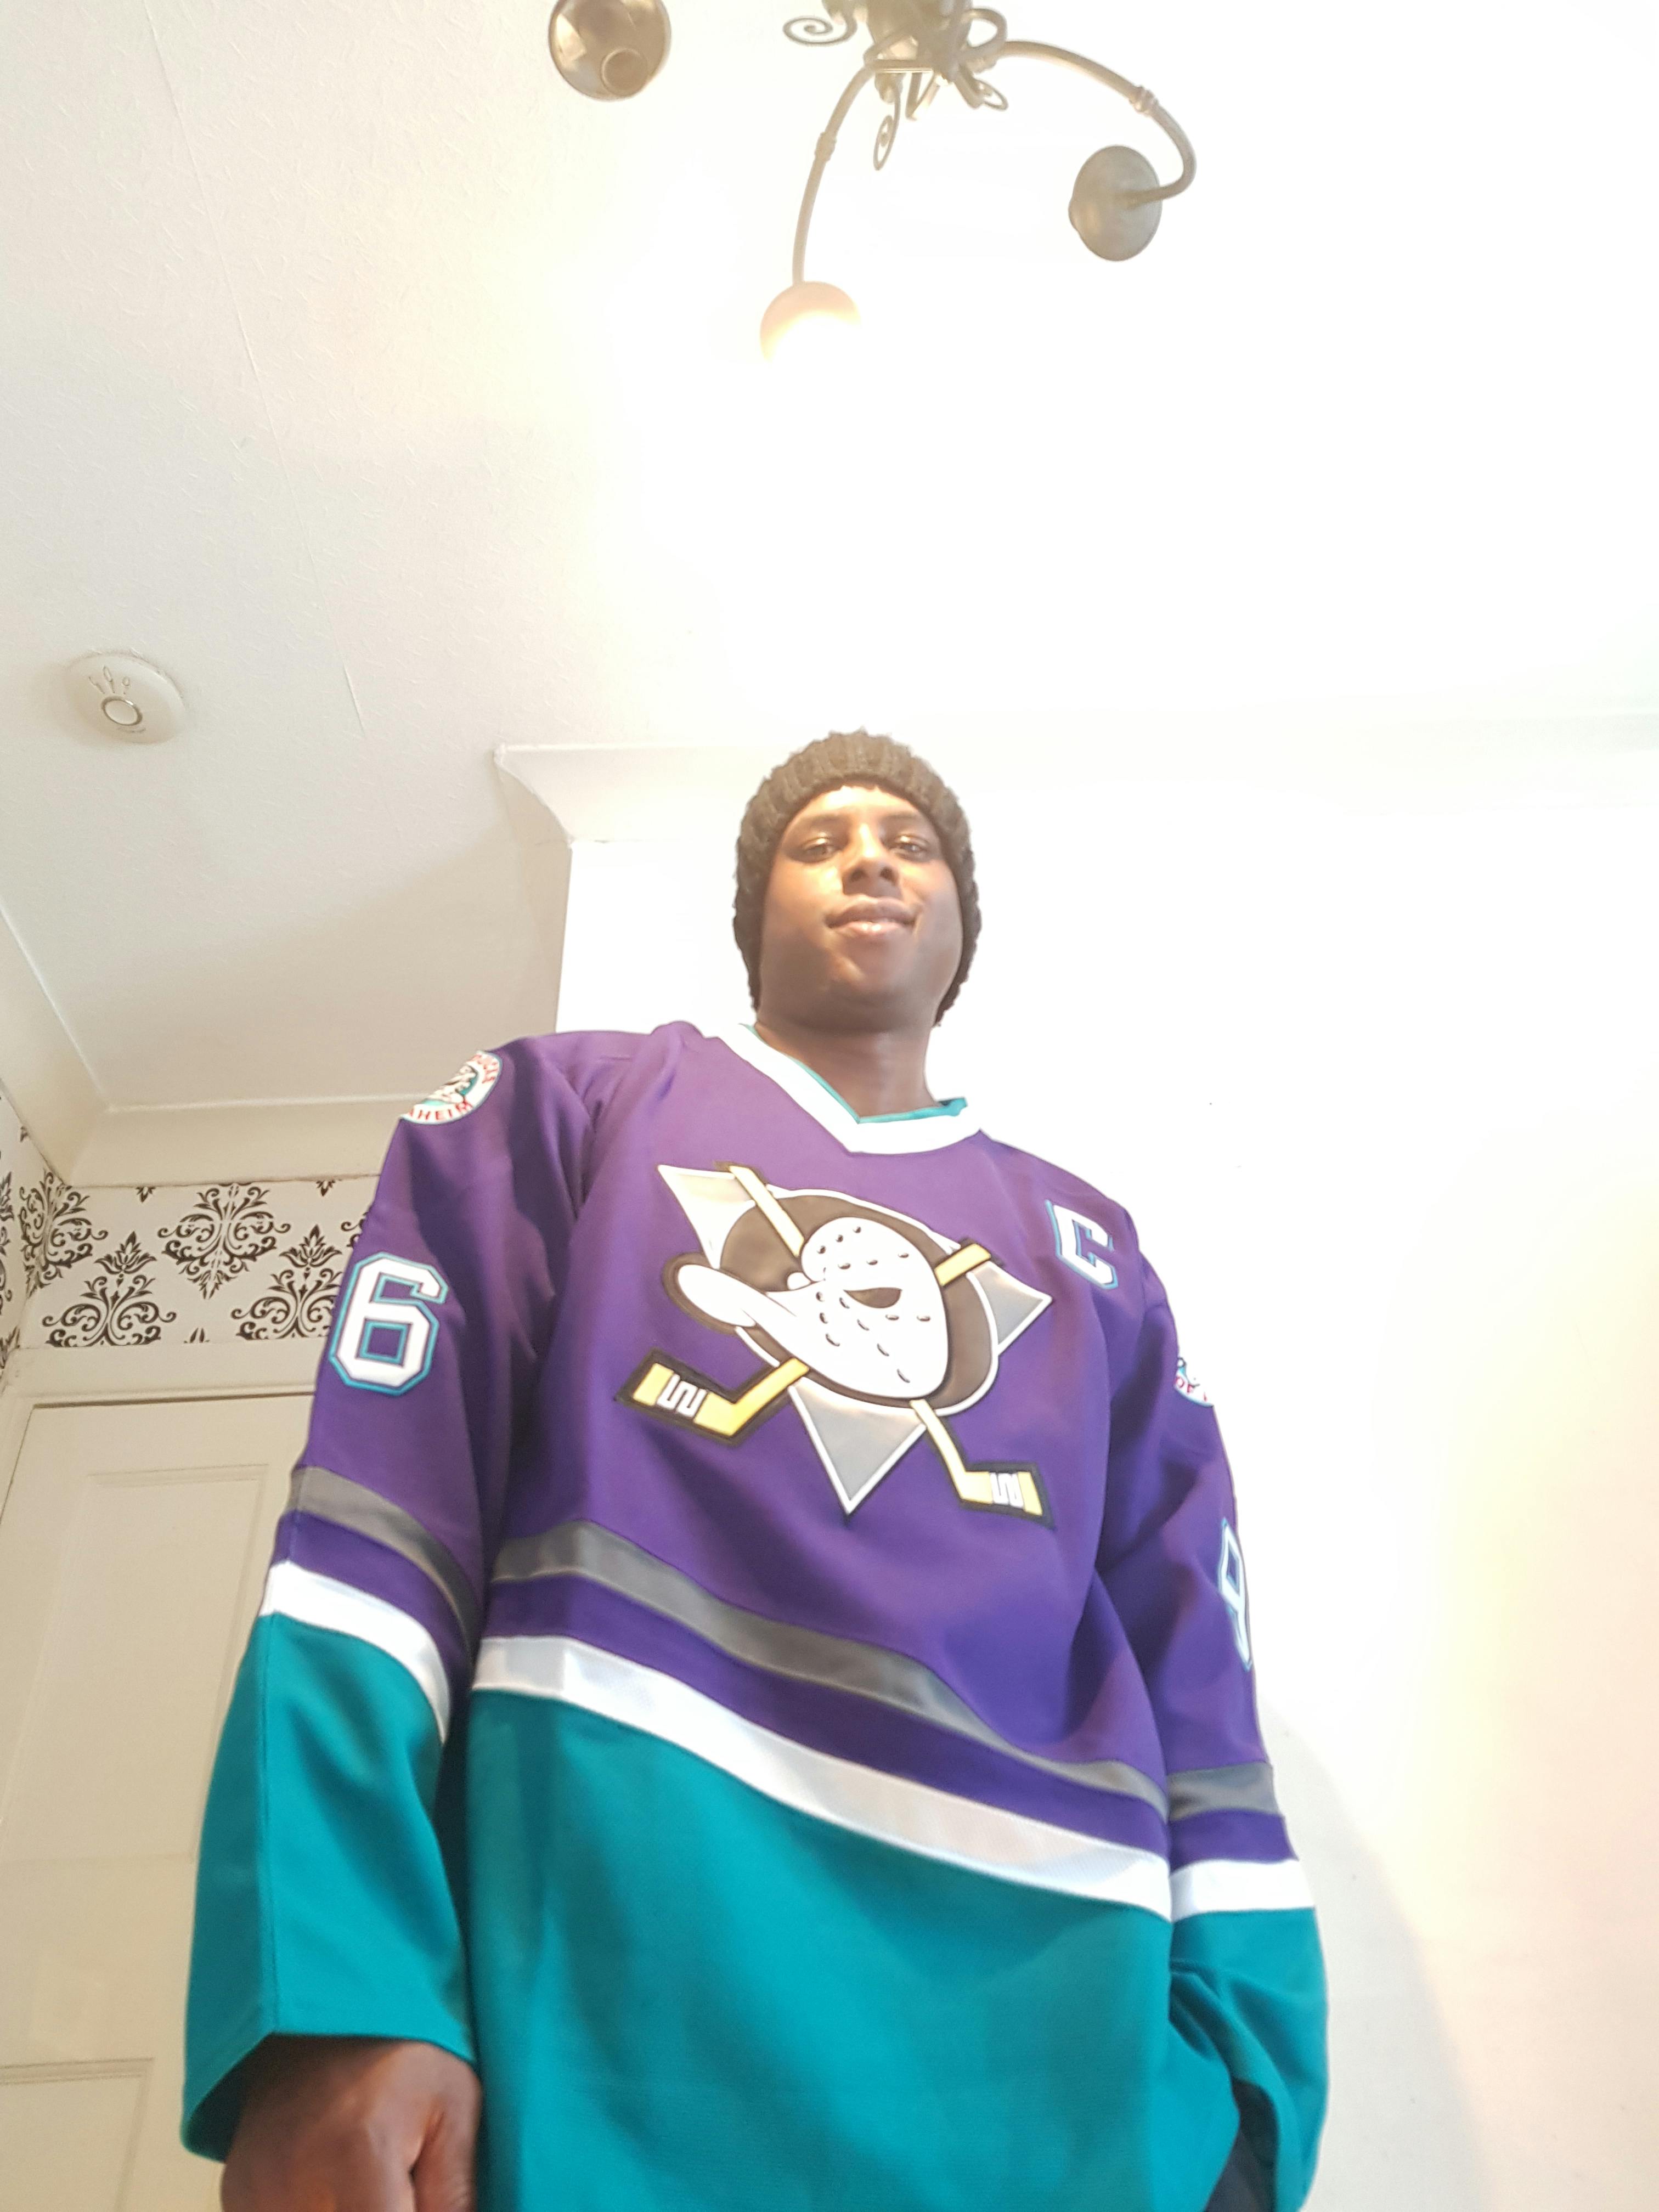 CCM Anaheim Mighty Ducks Purple used Small Jersey